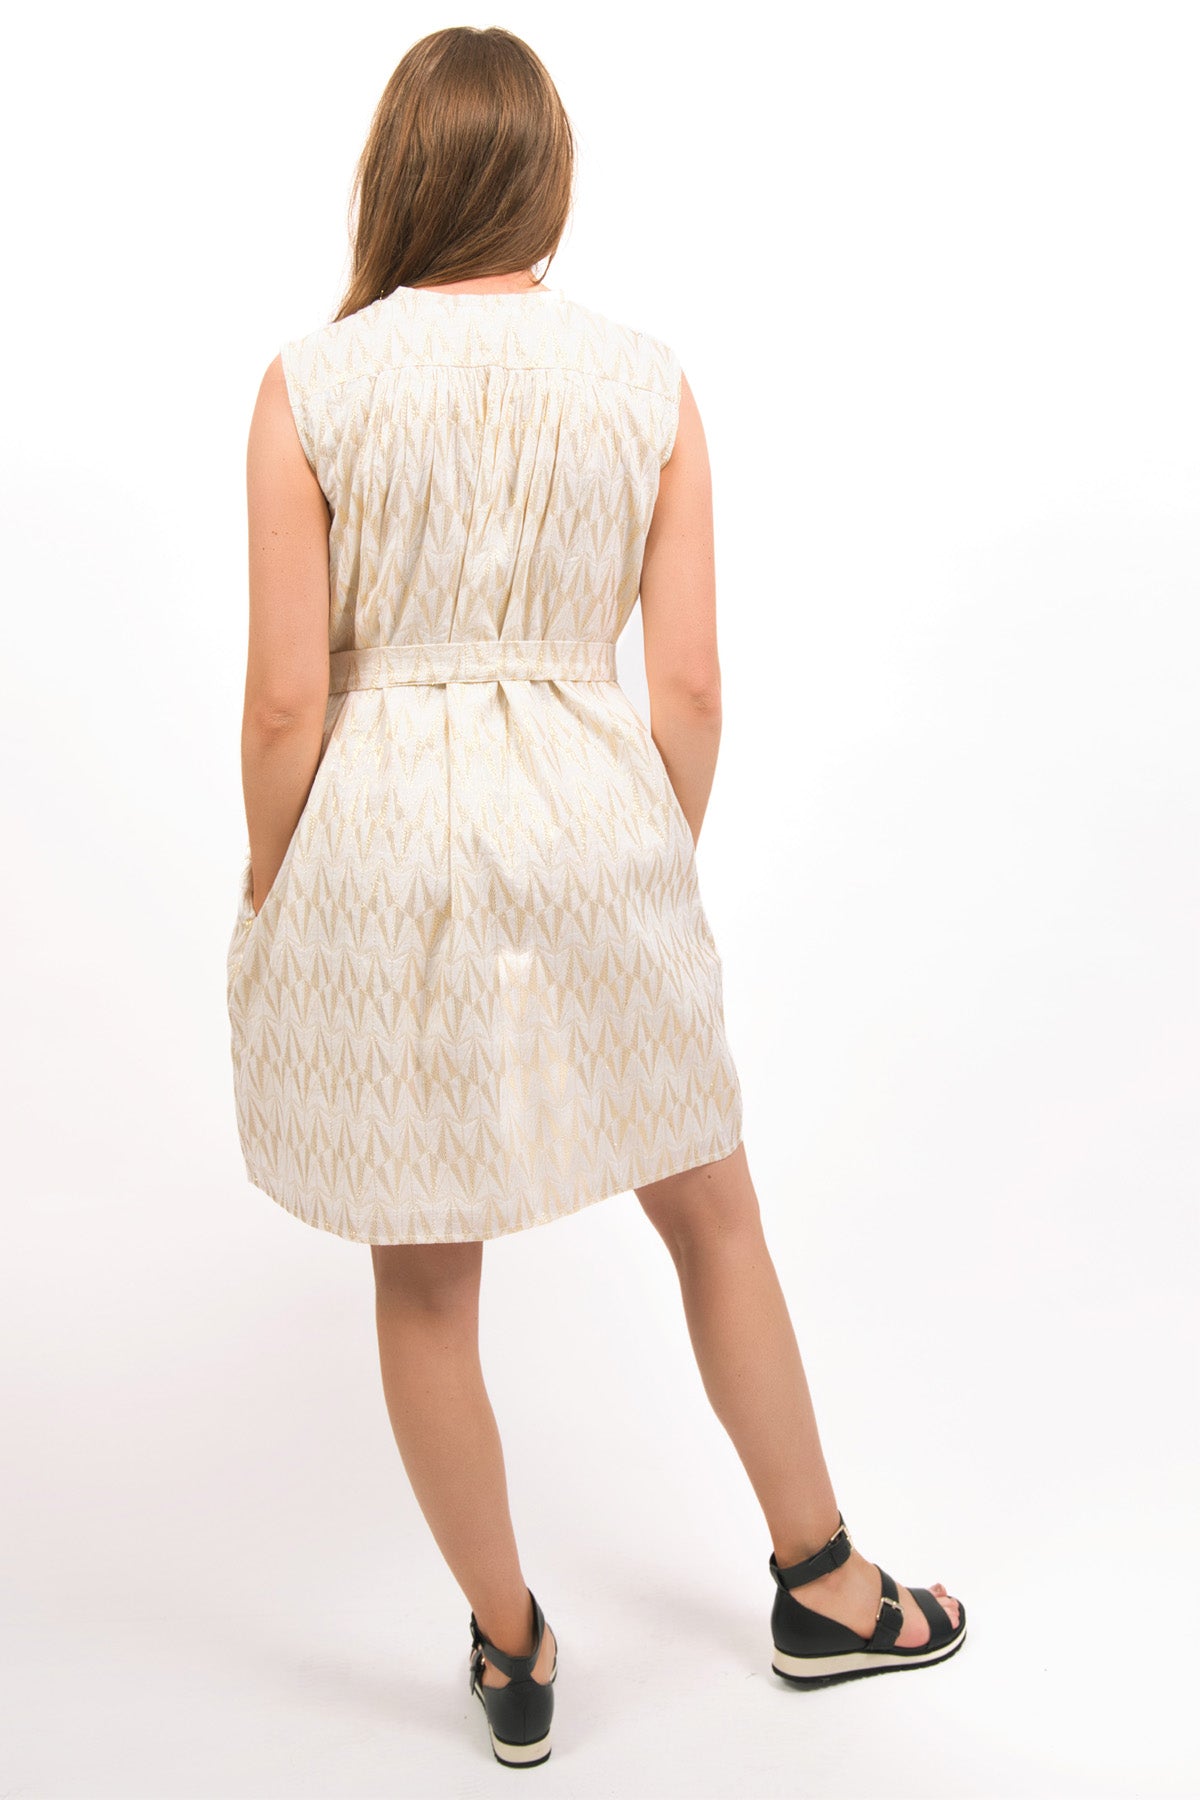 STELLA LUREX DRESS - BACK VIEW OF BELTED DRESS ON MODEL- zohaonline